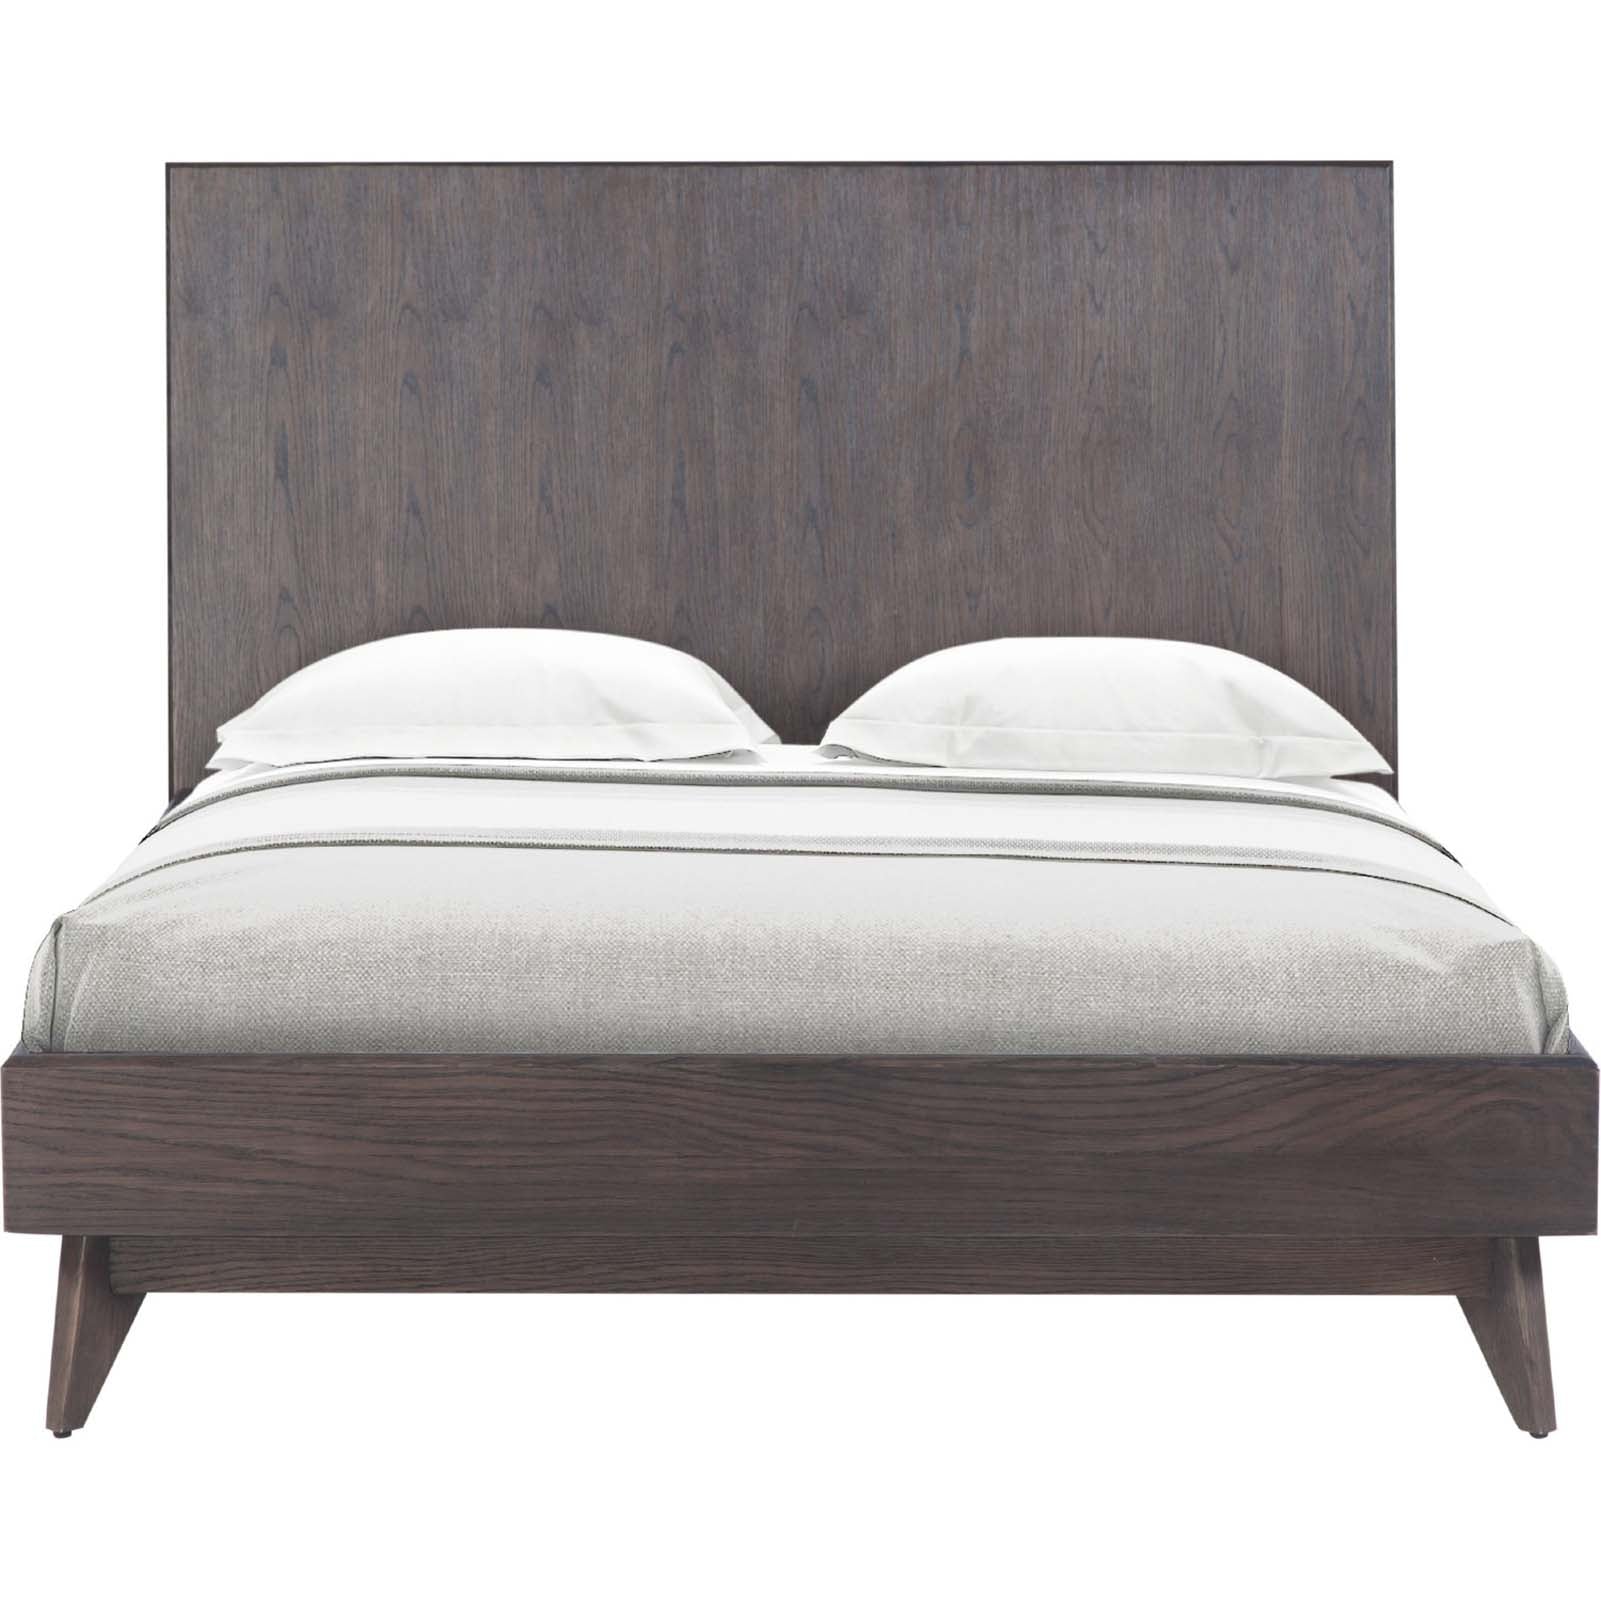 Tov-Loft Wooden King Bed-Beds-MODTEMPO